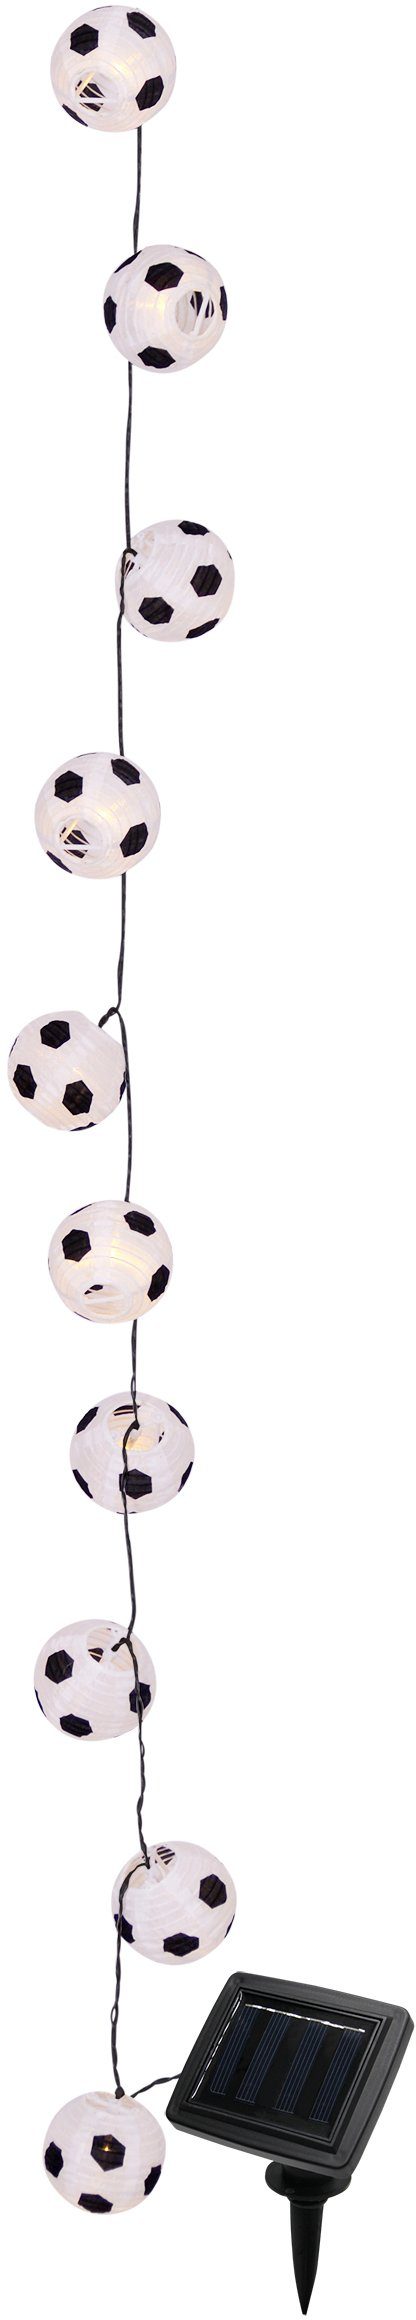 näve Lichterkette weiß/schwarz Metall, Kunststoff, Material: Japanballon-20er-Solar-Lichterkette, Farbe: Fußball, Polyester